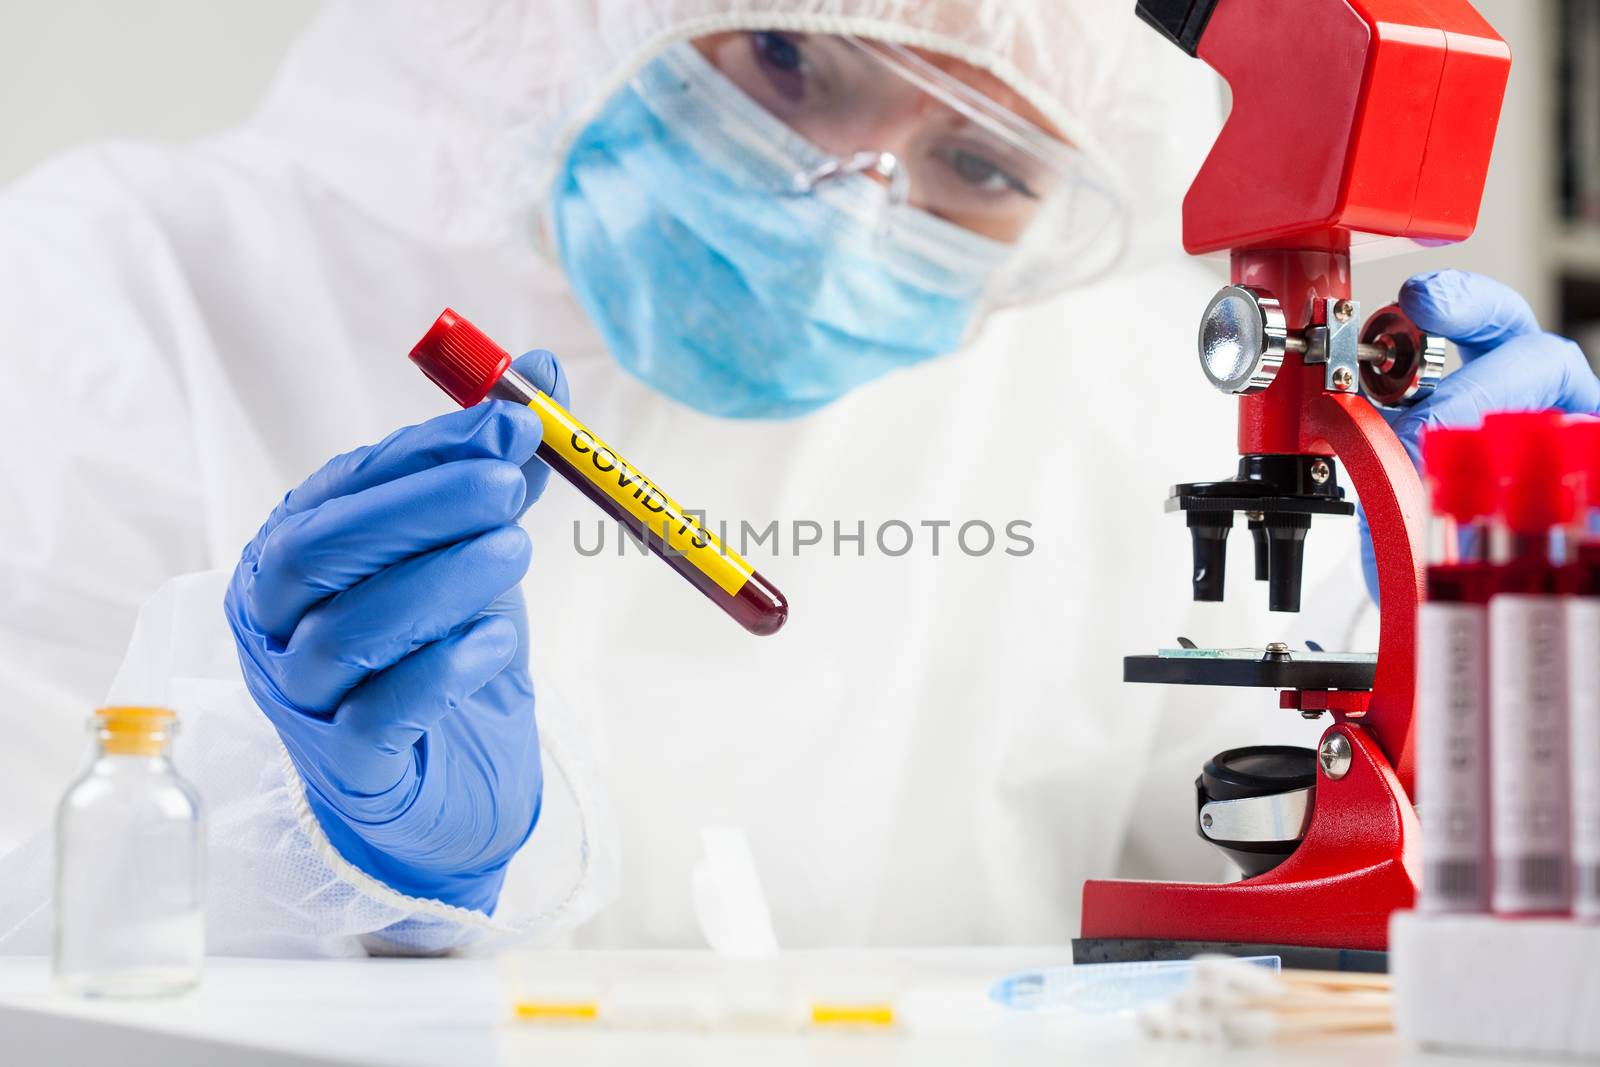 Medical technologist holding a COVID-19 test tube blood sample, contagious dangerous Coronavirus disease global pandemic outbreak, hazard patient specimen laboratory testing analysis procedure